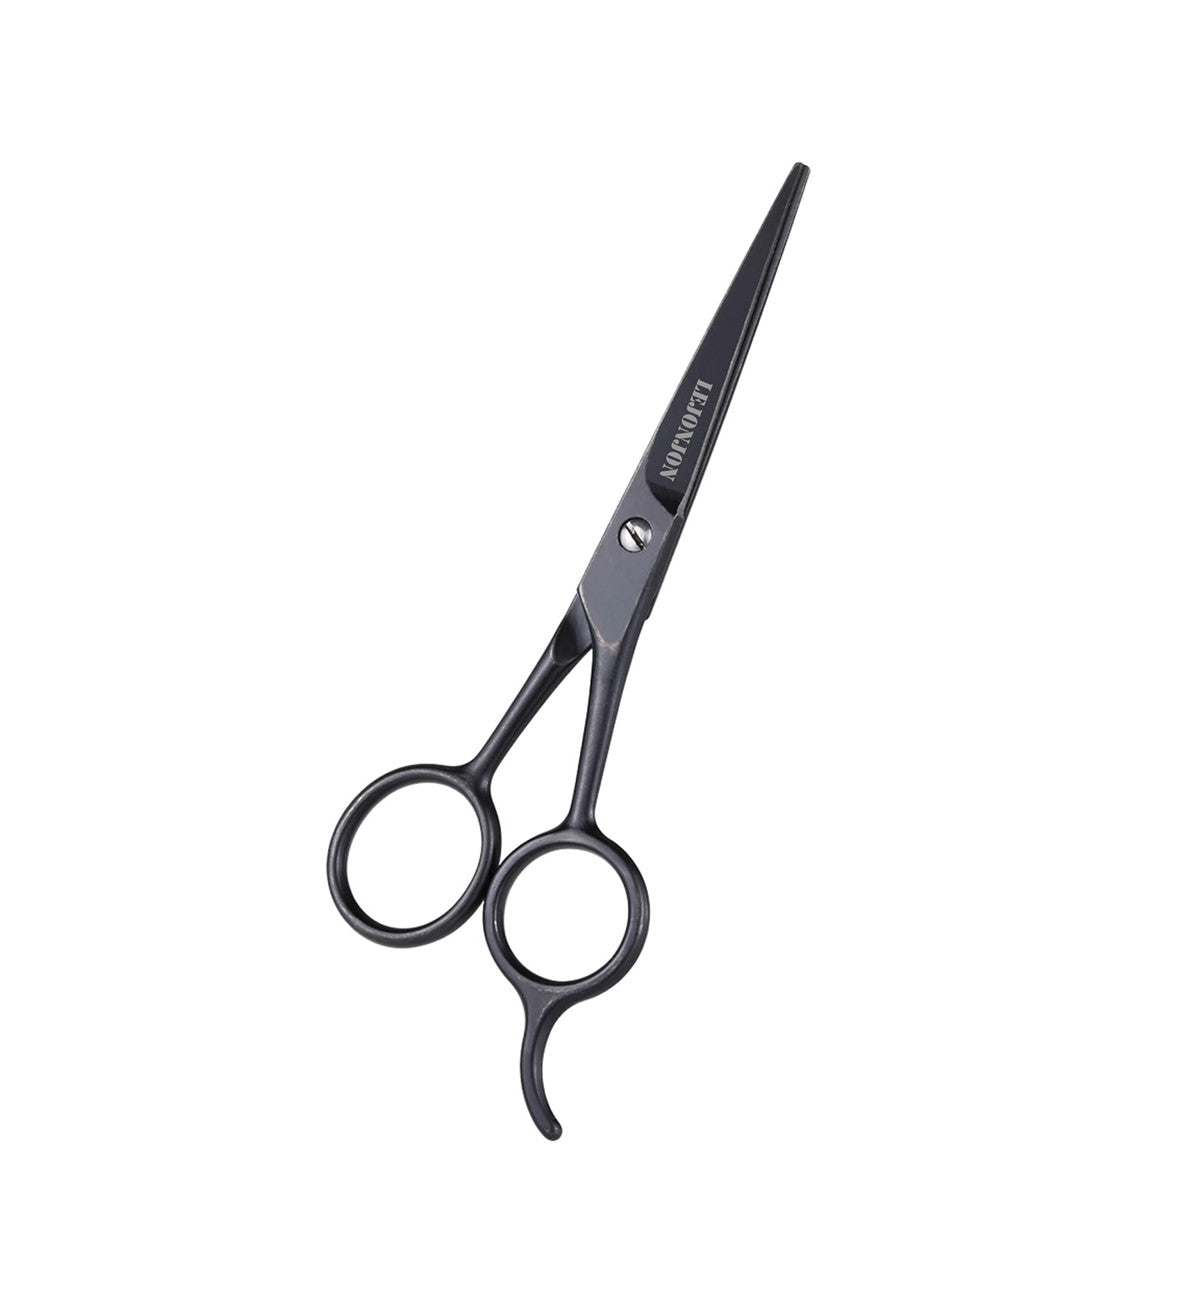 Beard trimming scissors